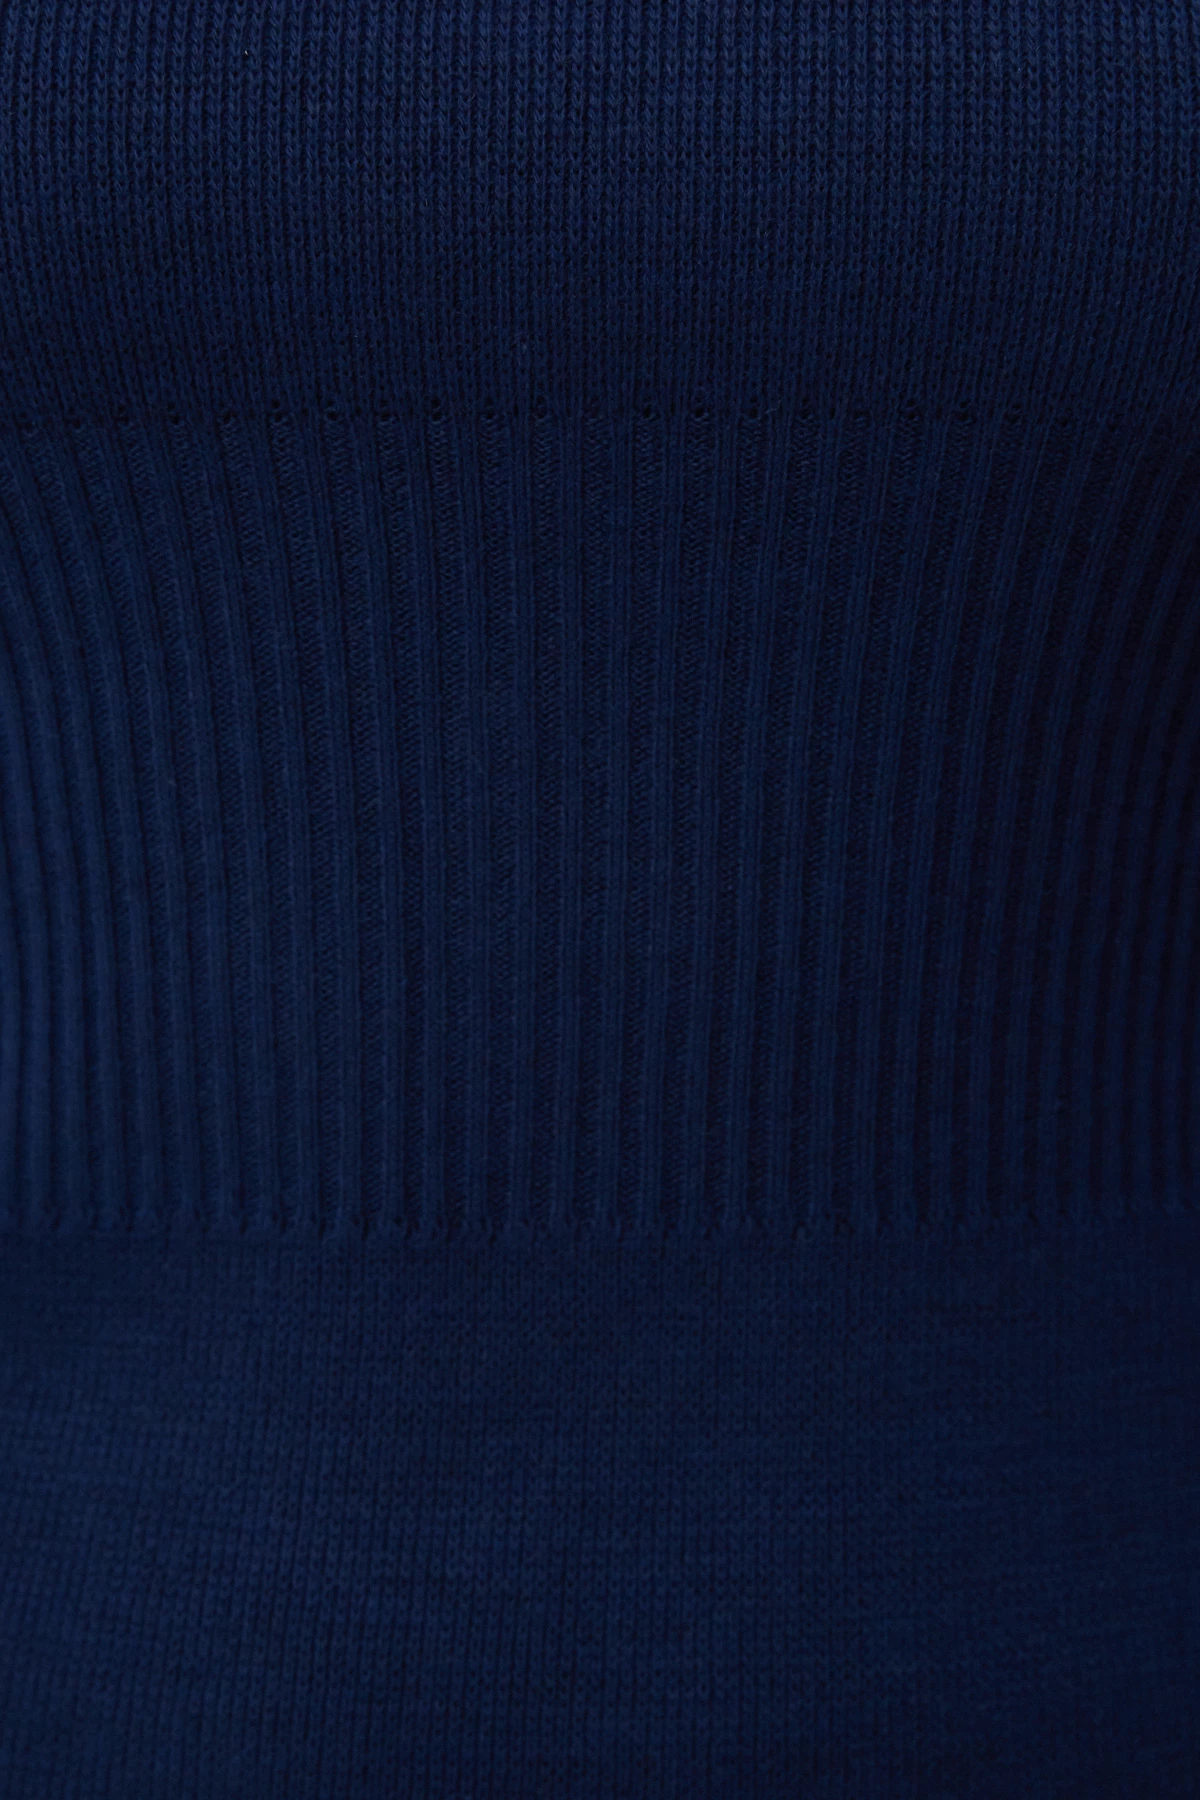 Navy blue knitted wool midi dress, photo 4